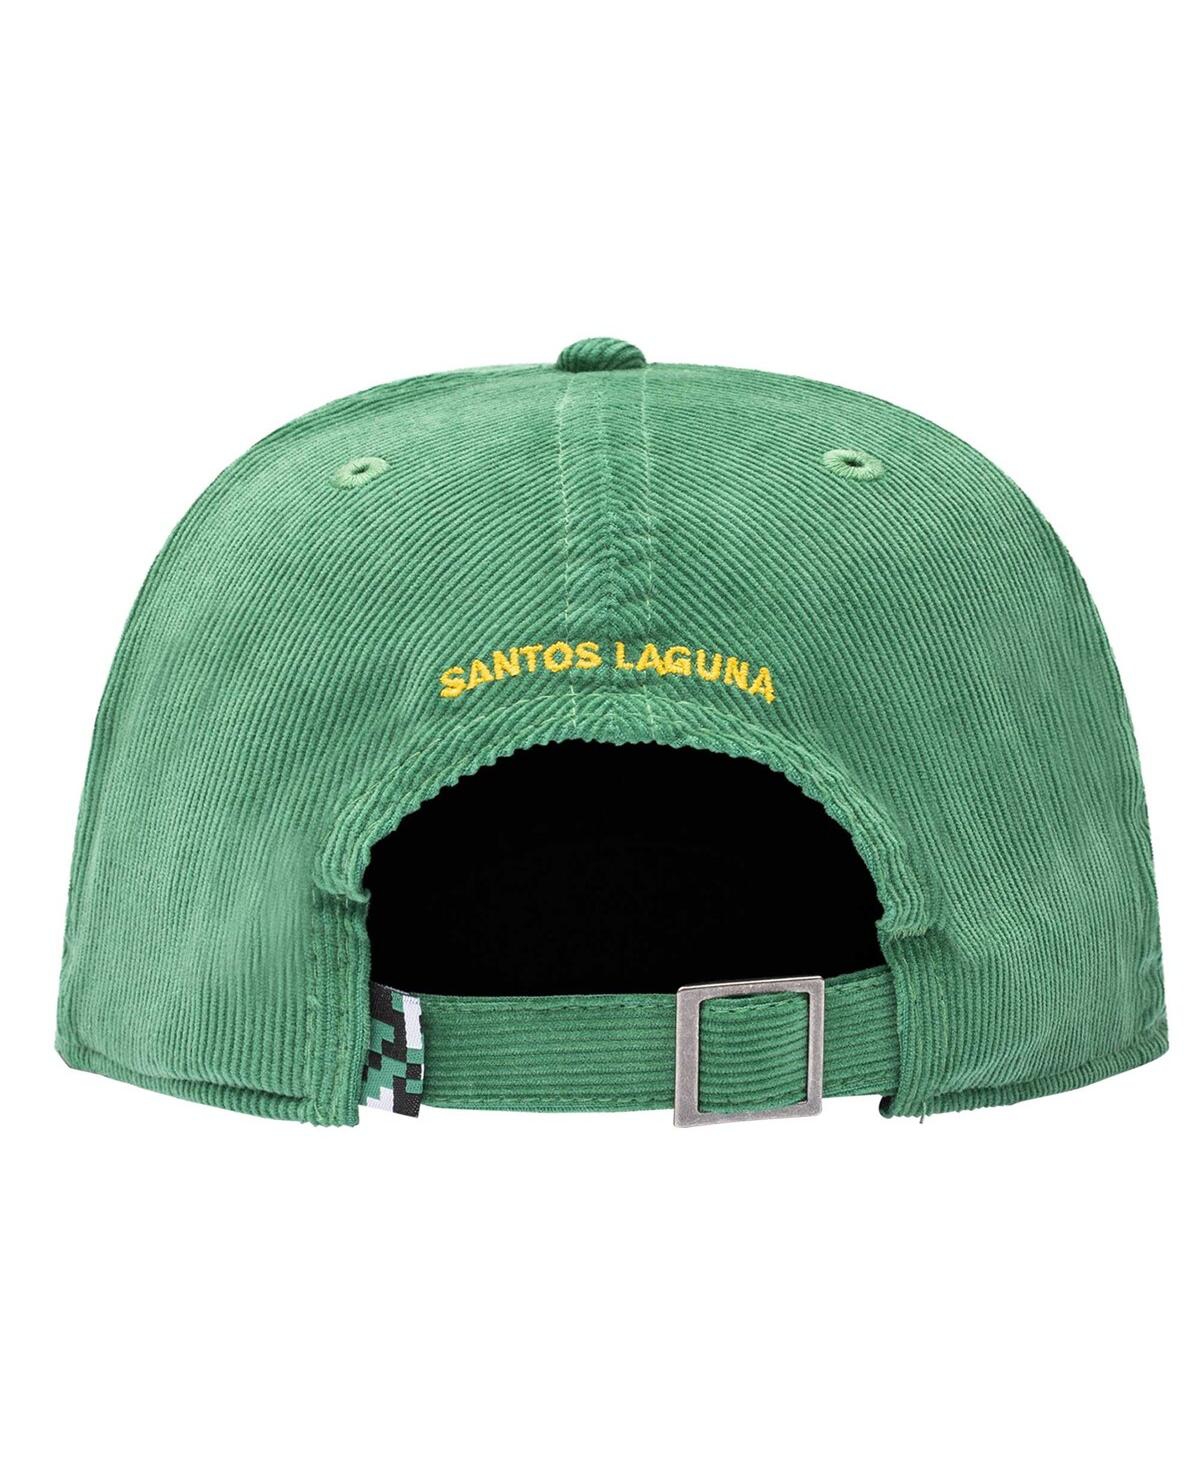 Shop Fan Ink Men's Green Santos Laguna Snow Beach Adjustable Hat